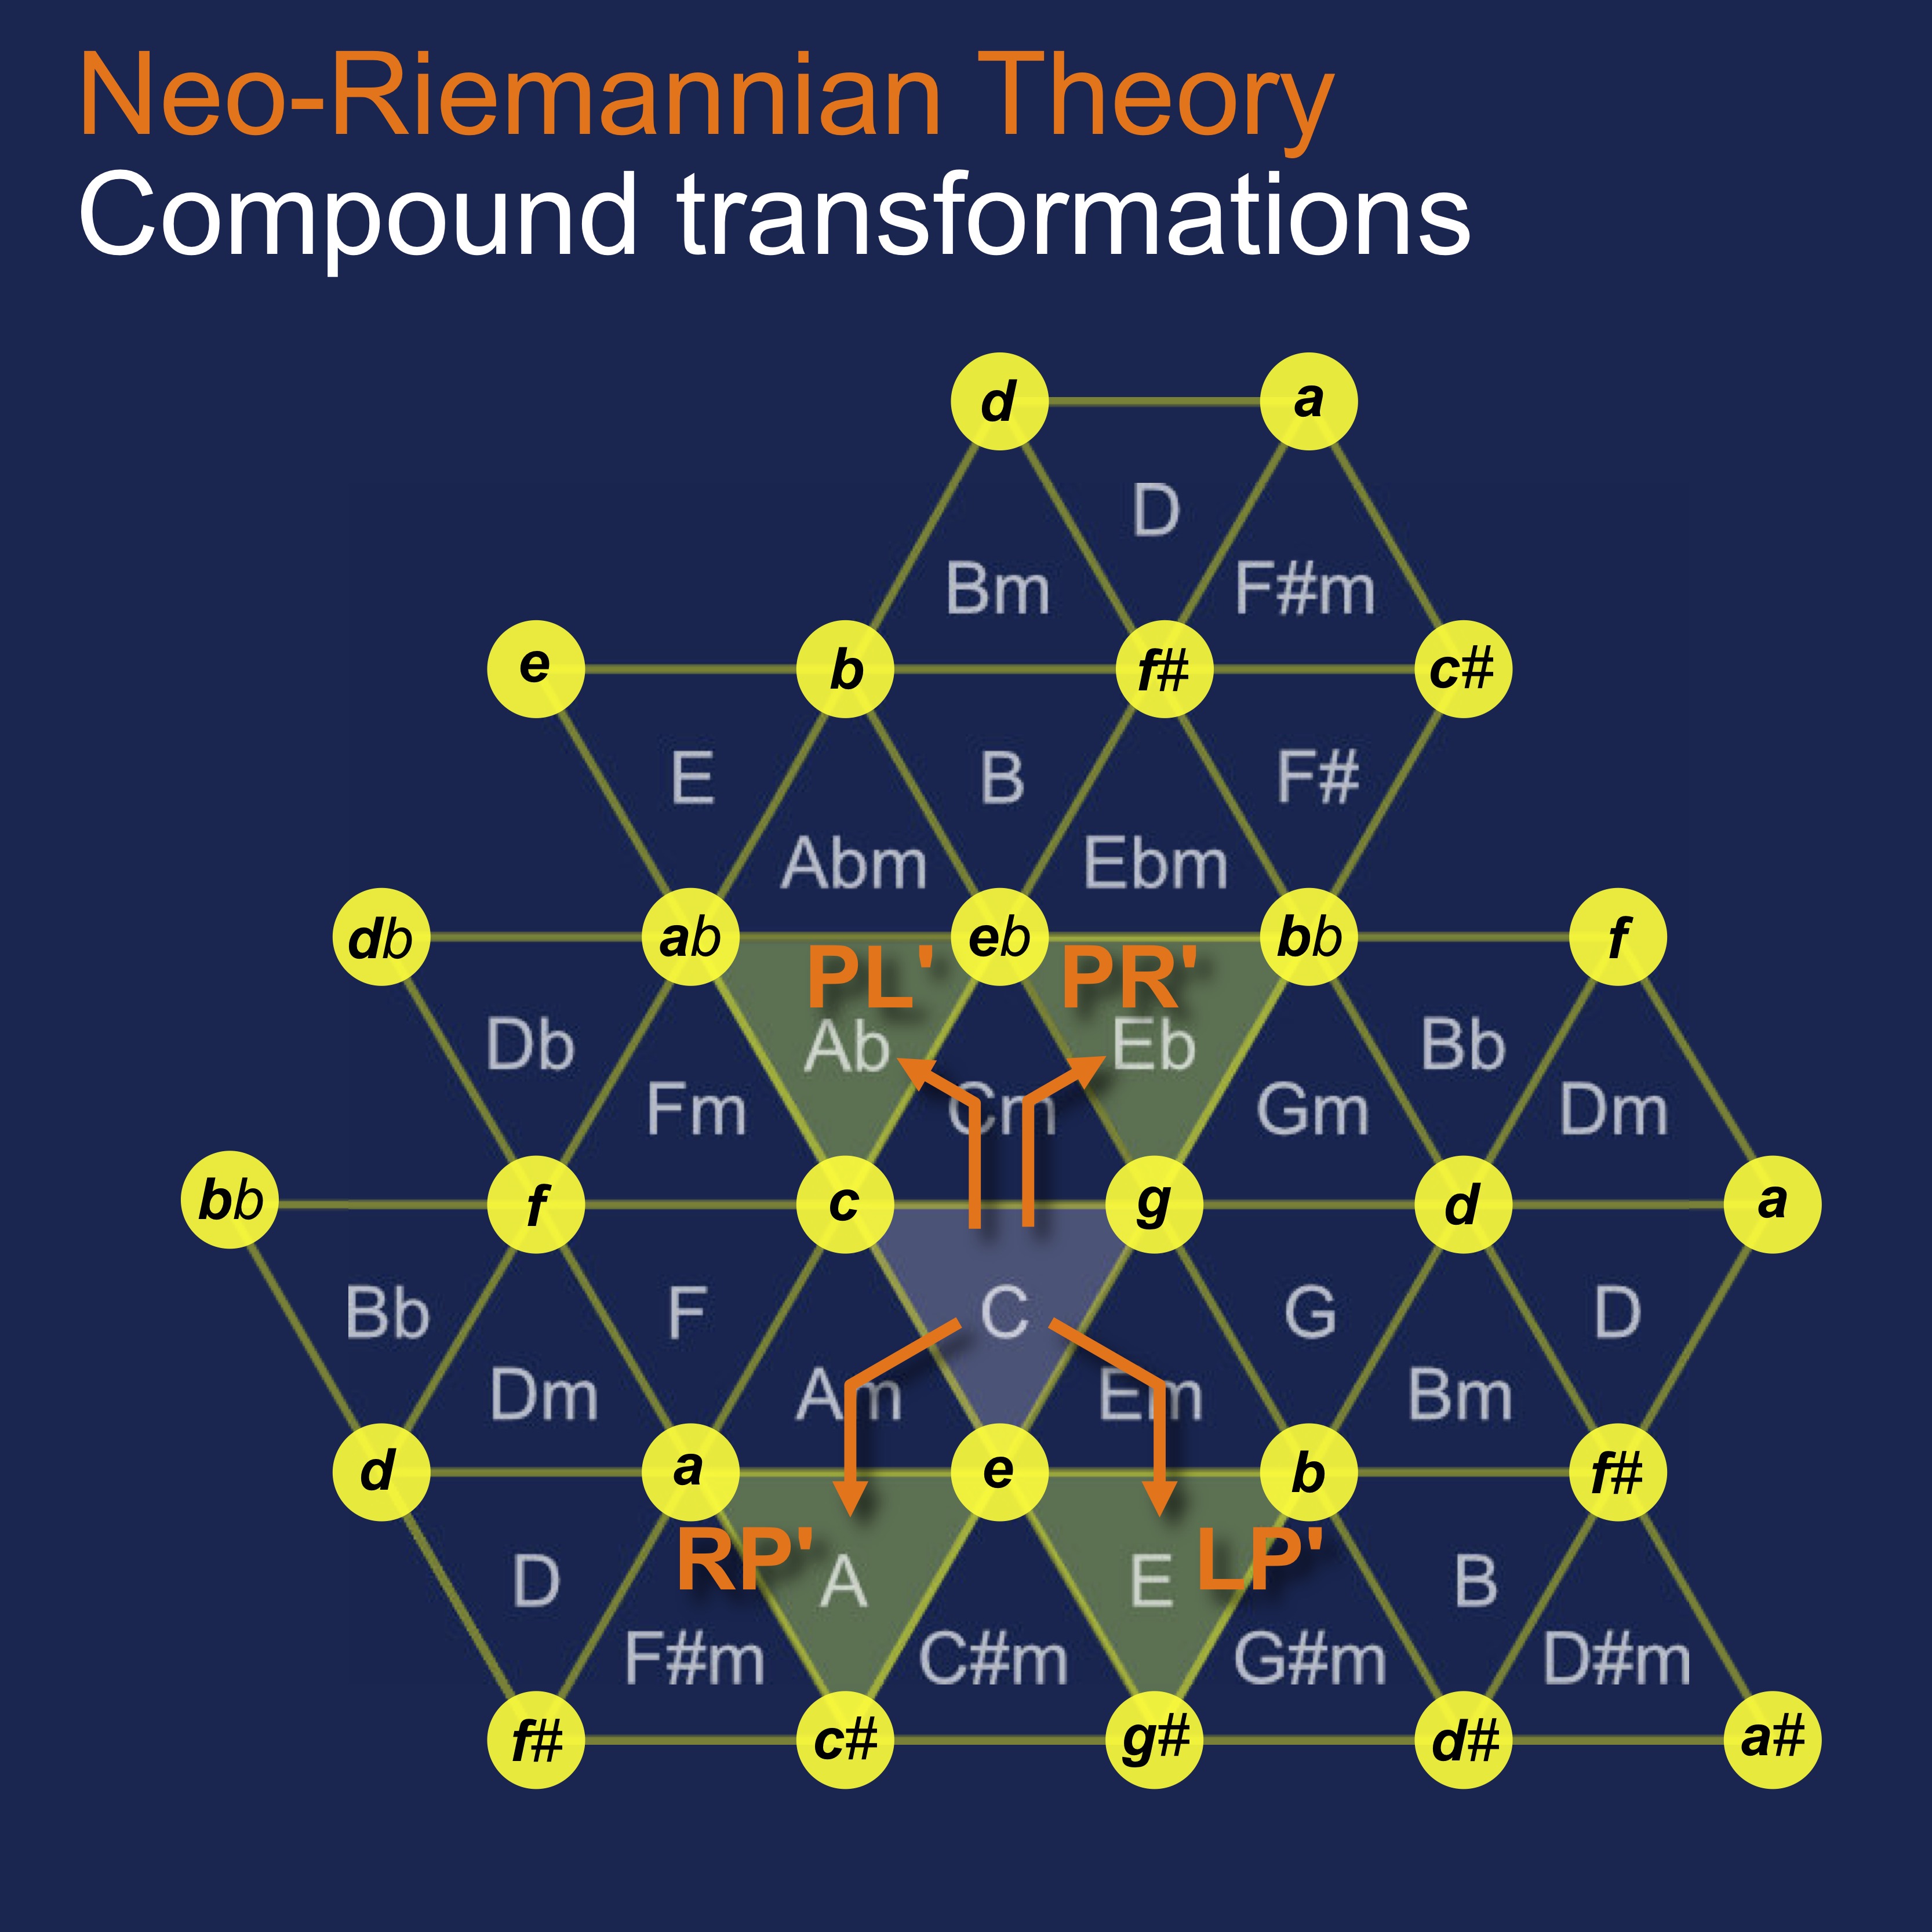 Compound Riemannian Transformations in the Tonnetz